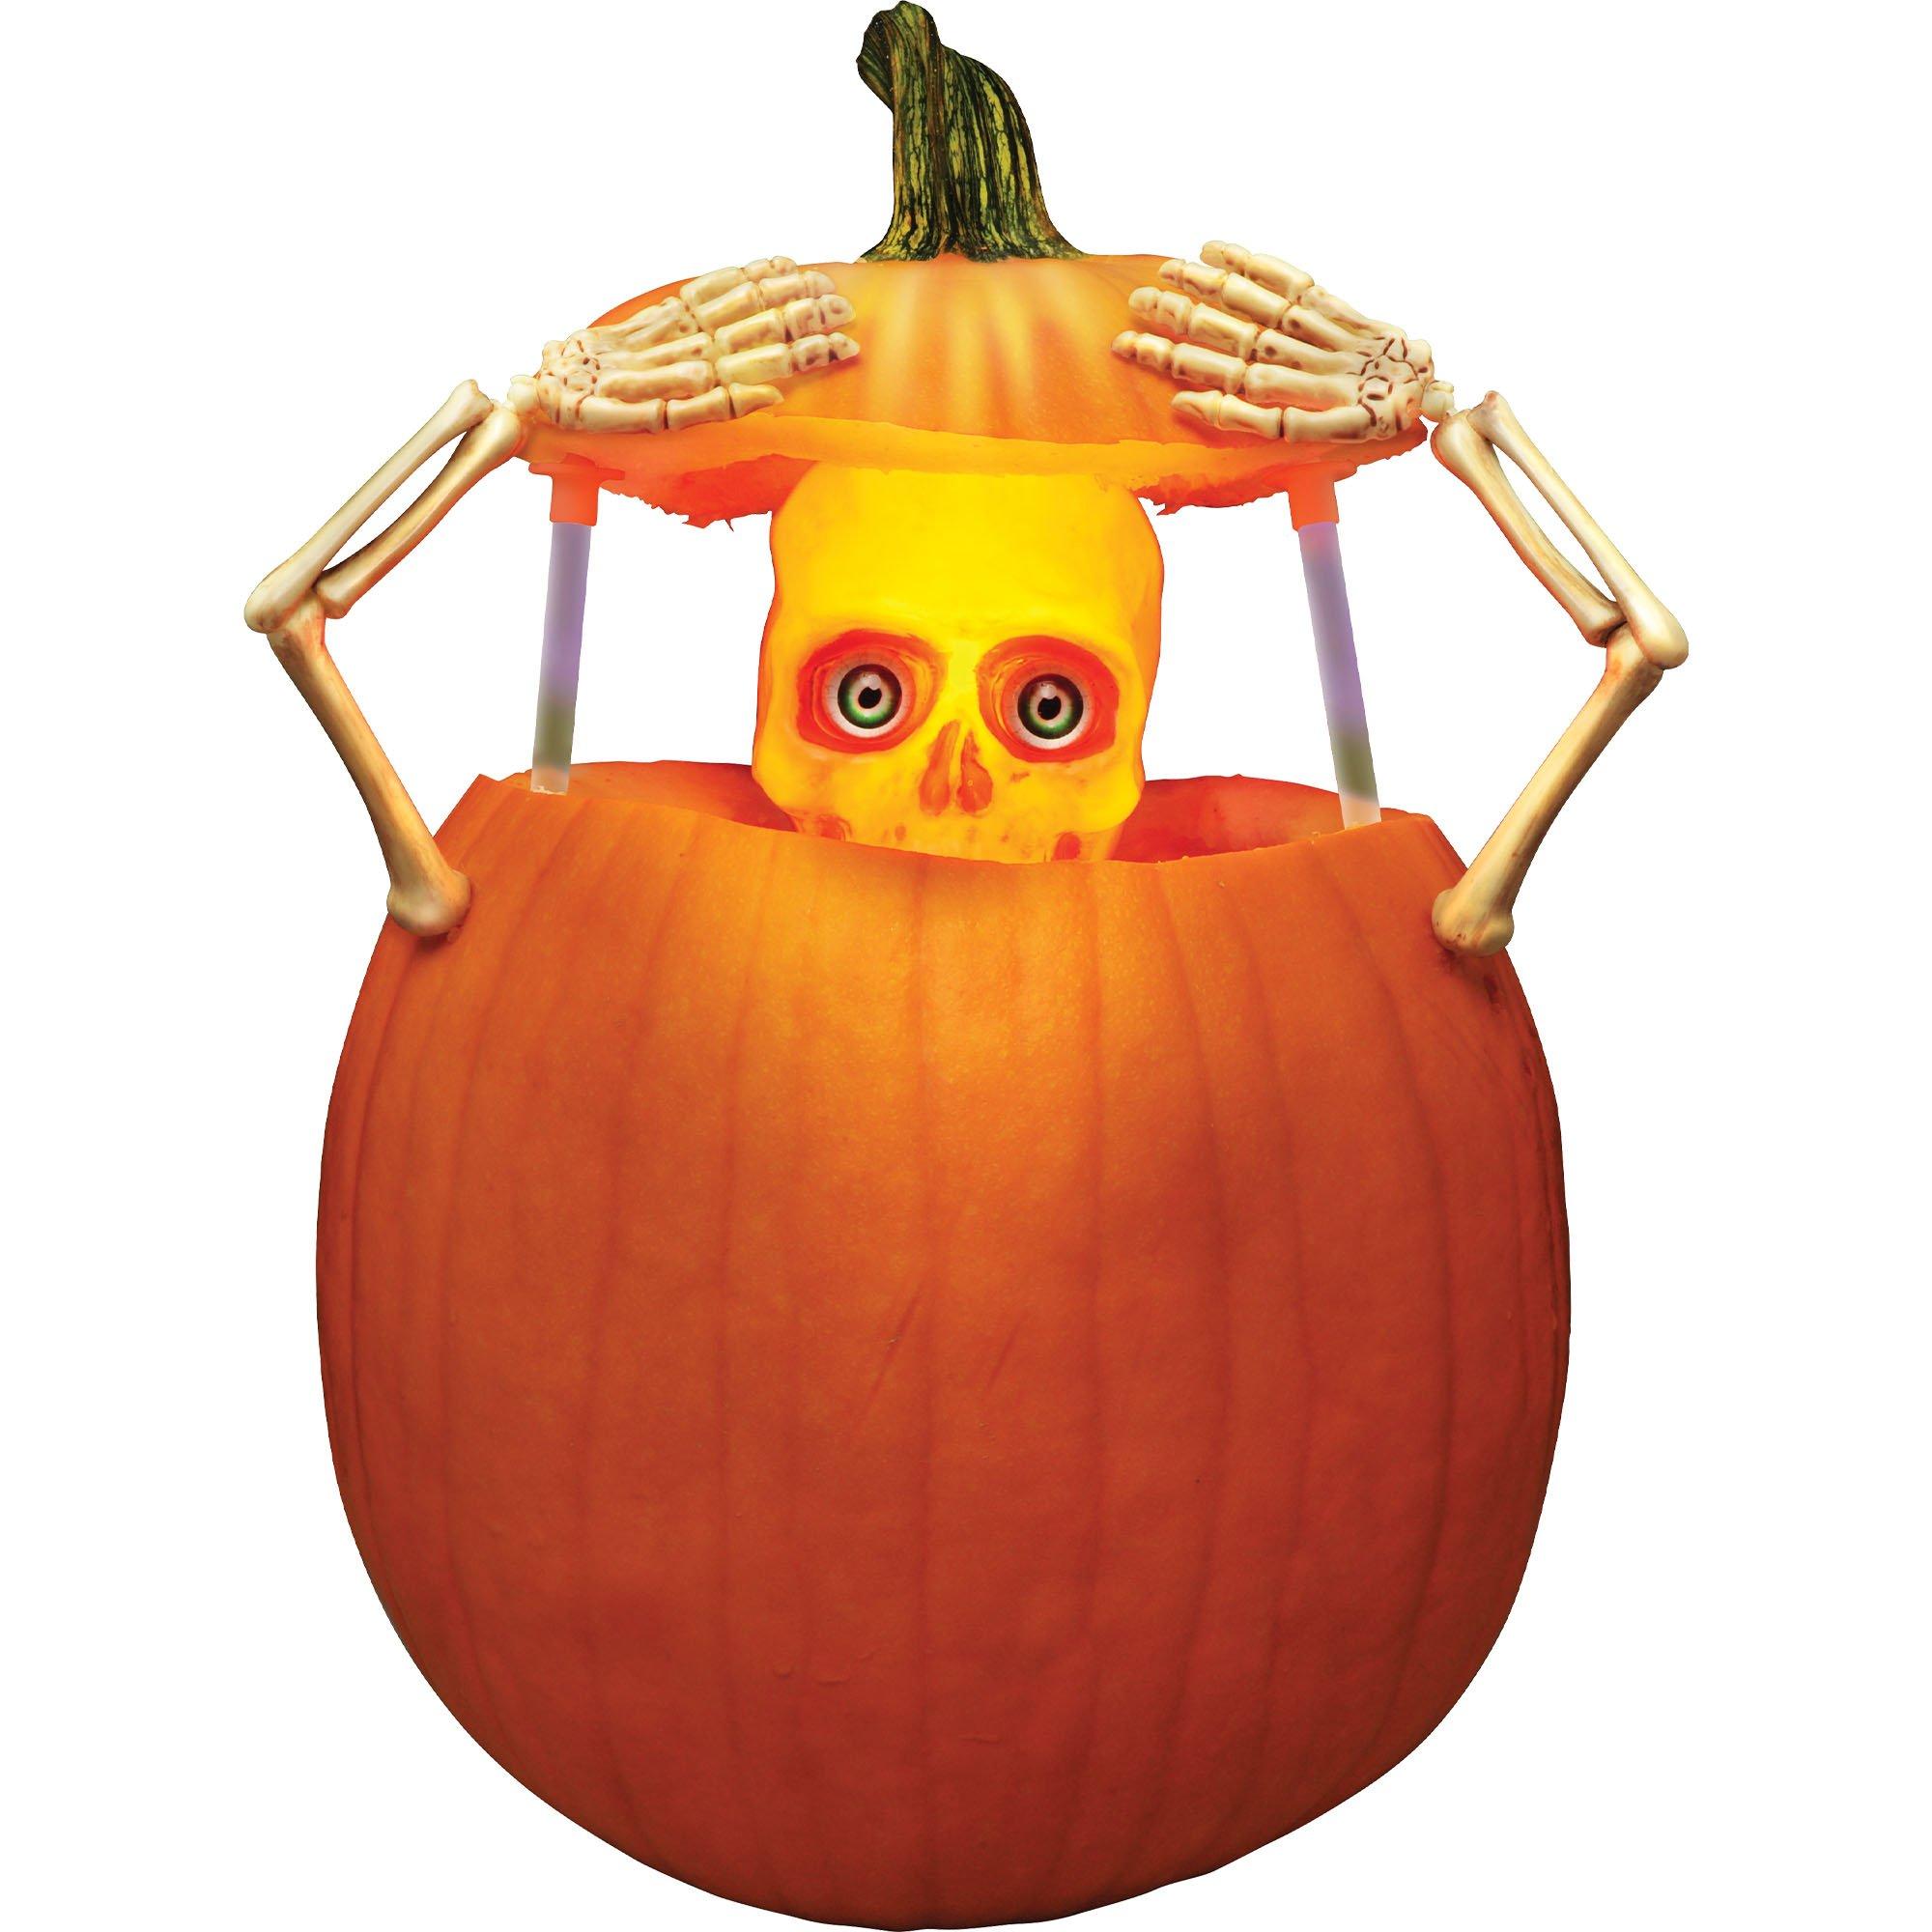 Pumpkin Carving & Decorating Kits | Party City